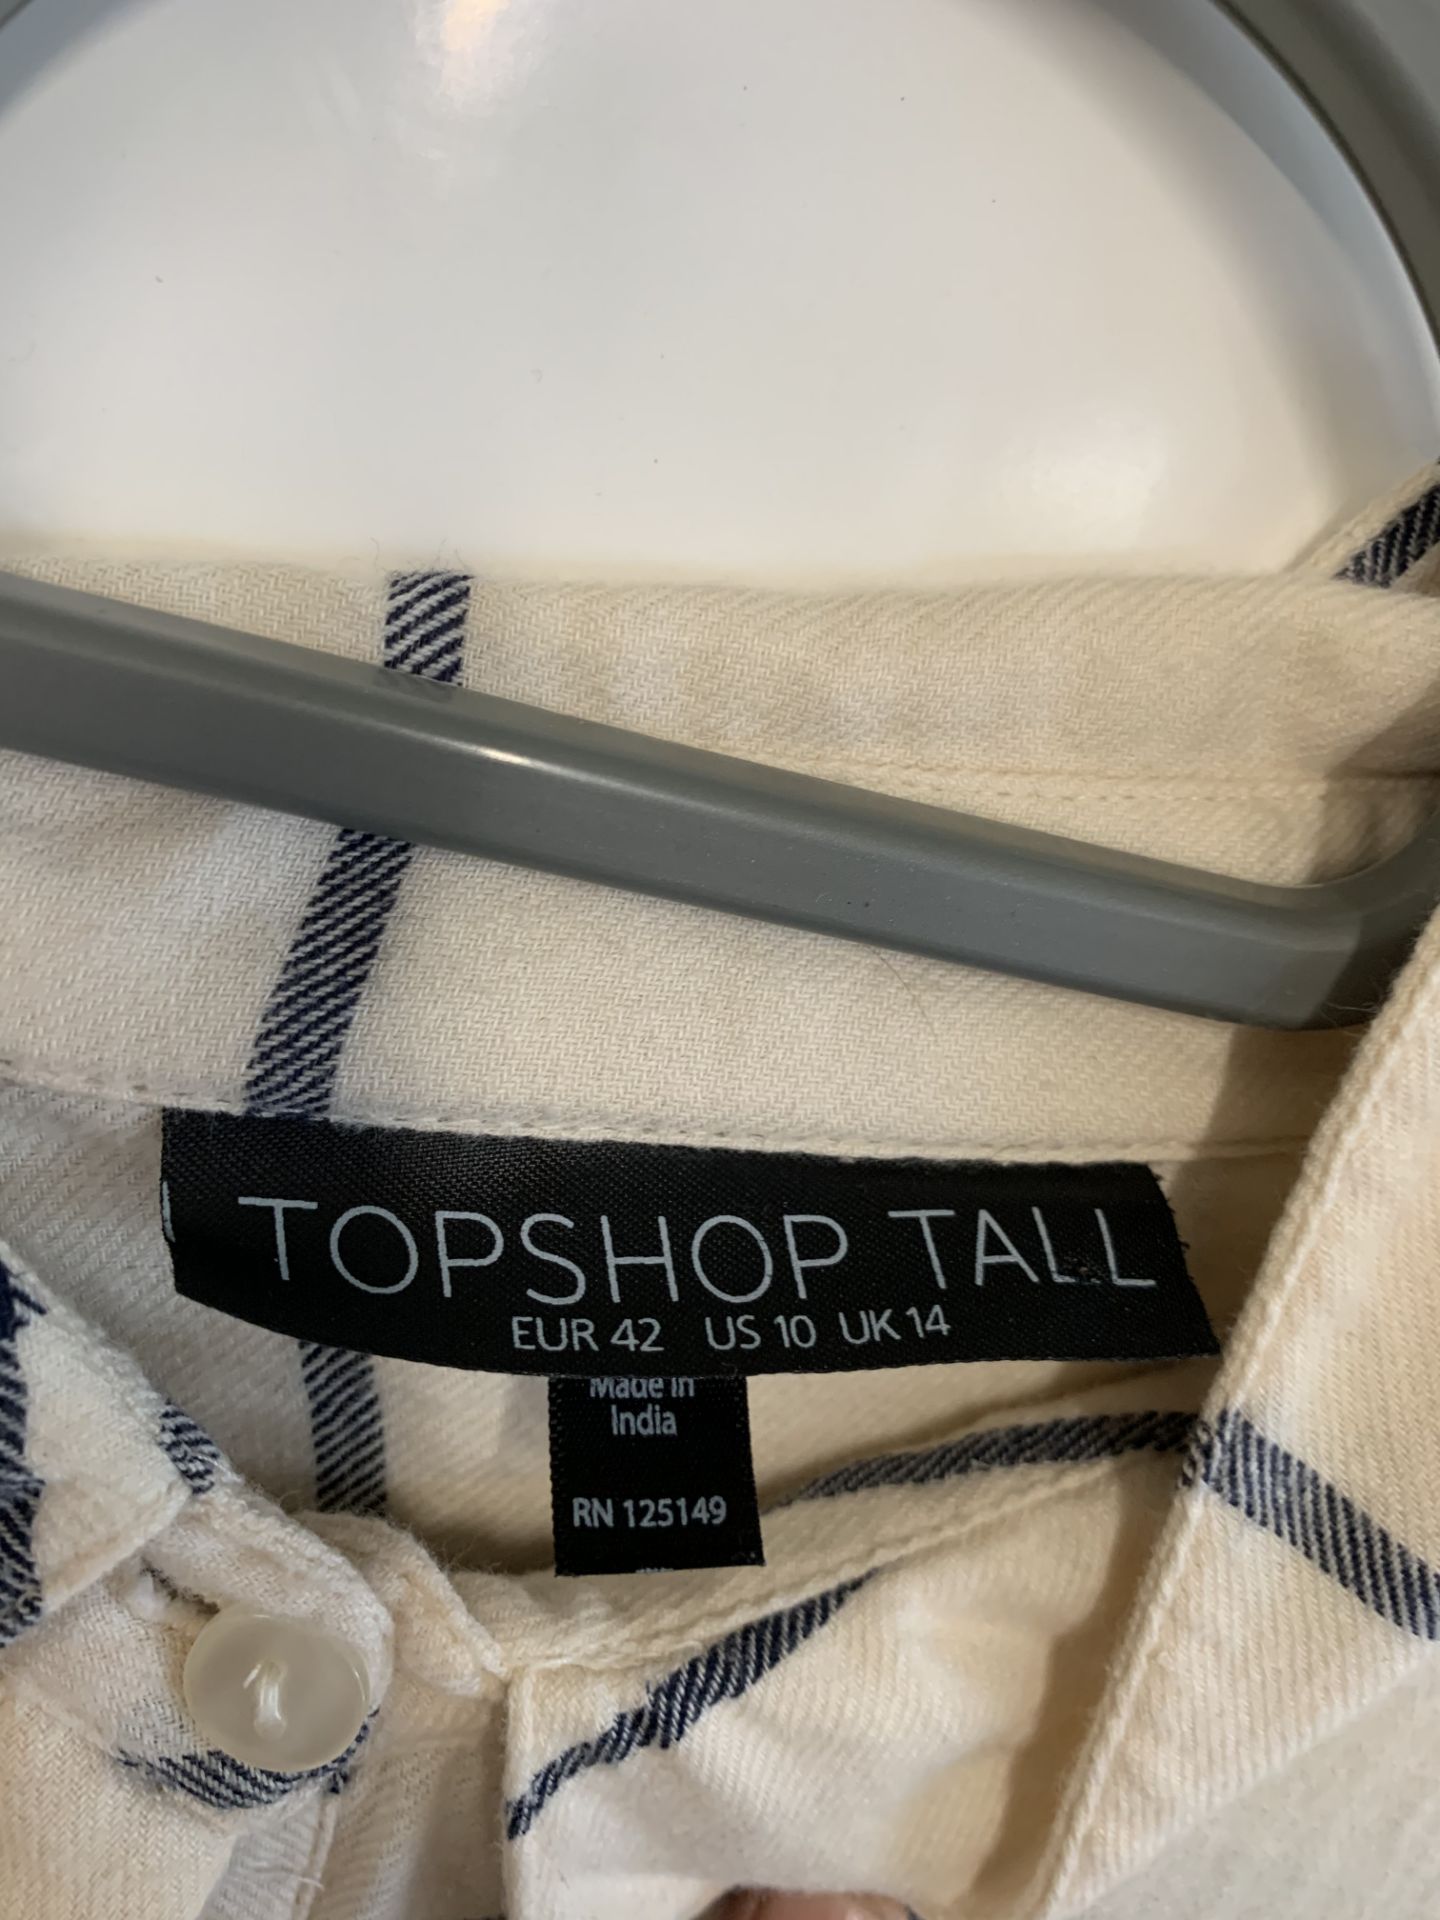 Topshop tall women's white chequered shirt - Image 2 of 2